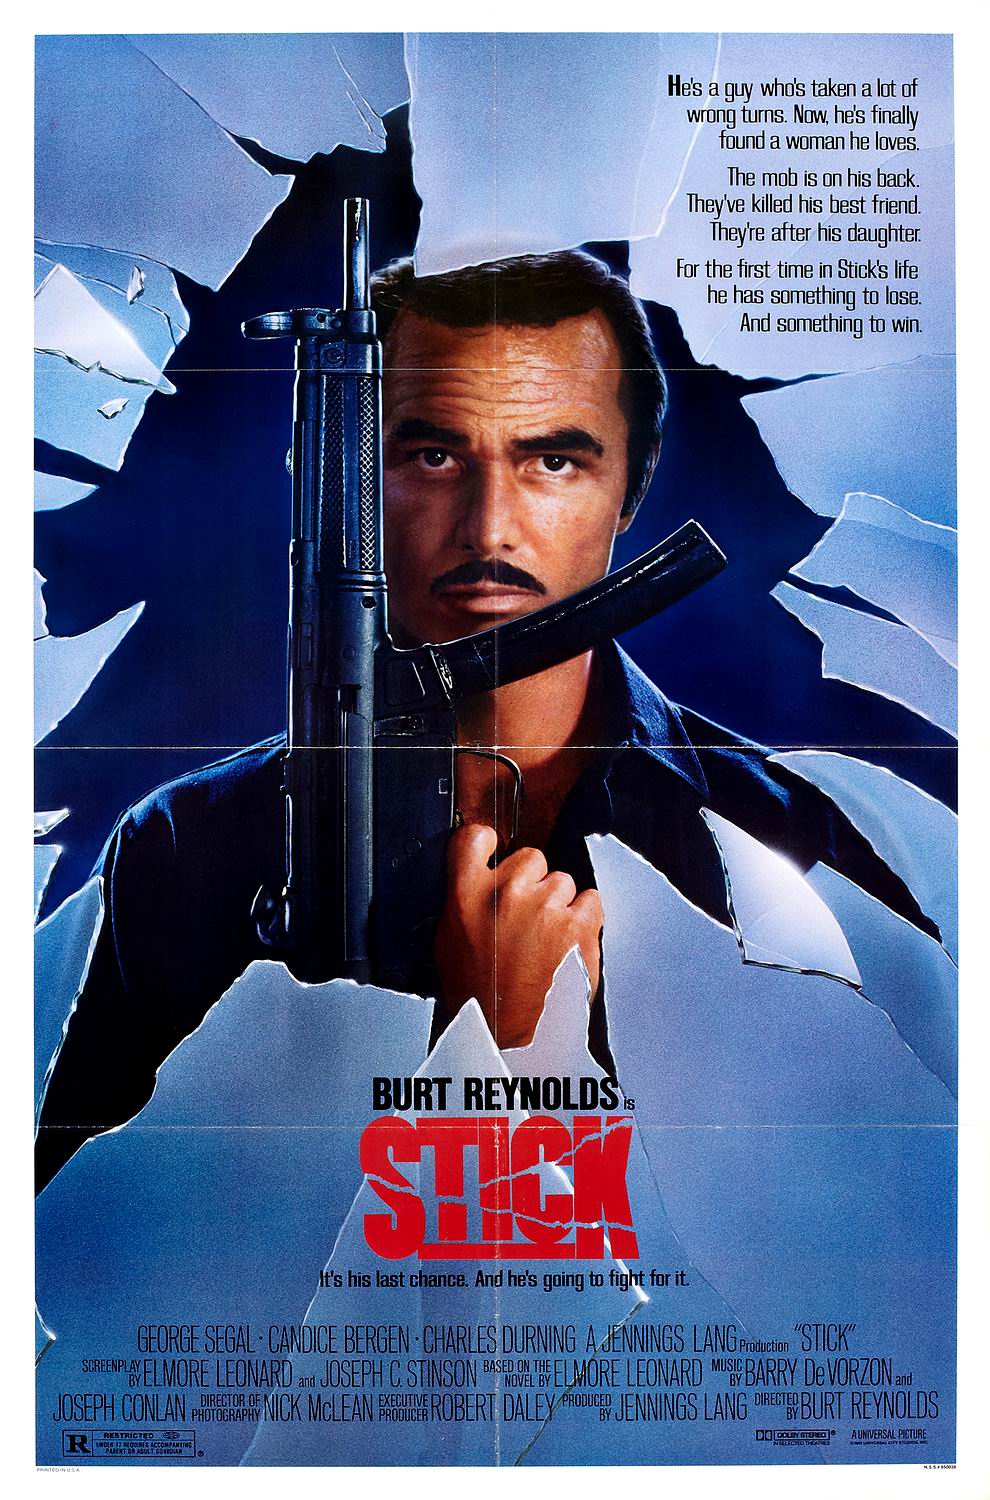 Stick : Le justicier de Miami (1983) Burt Reynolds - Stick (10.1983 / 1983)